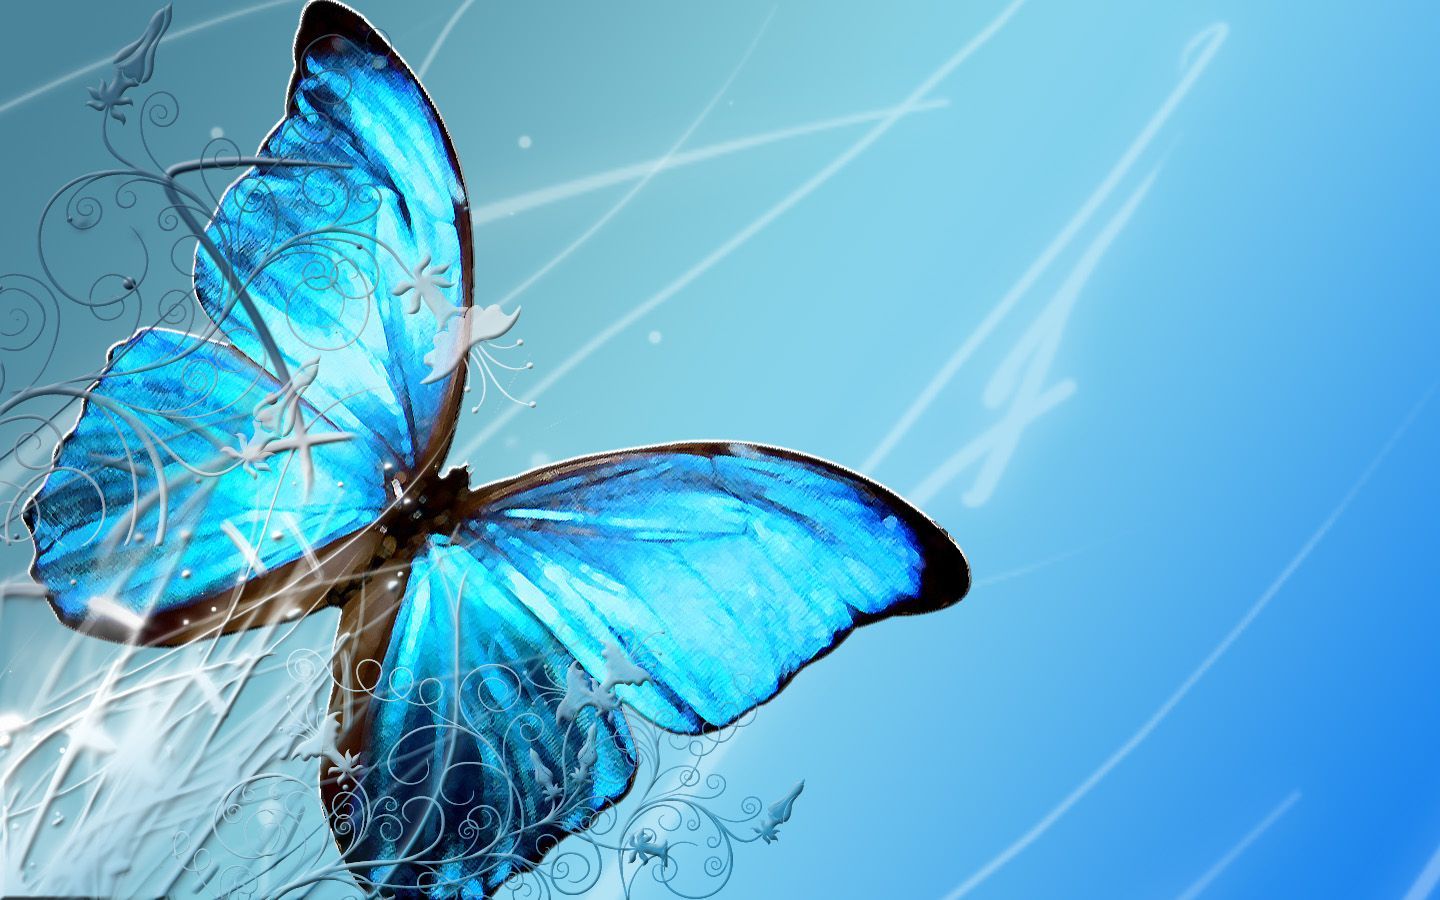 Abstract Butterflies Desktop Wallpapers